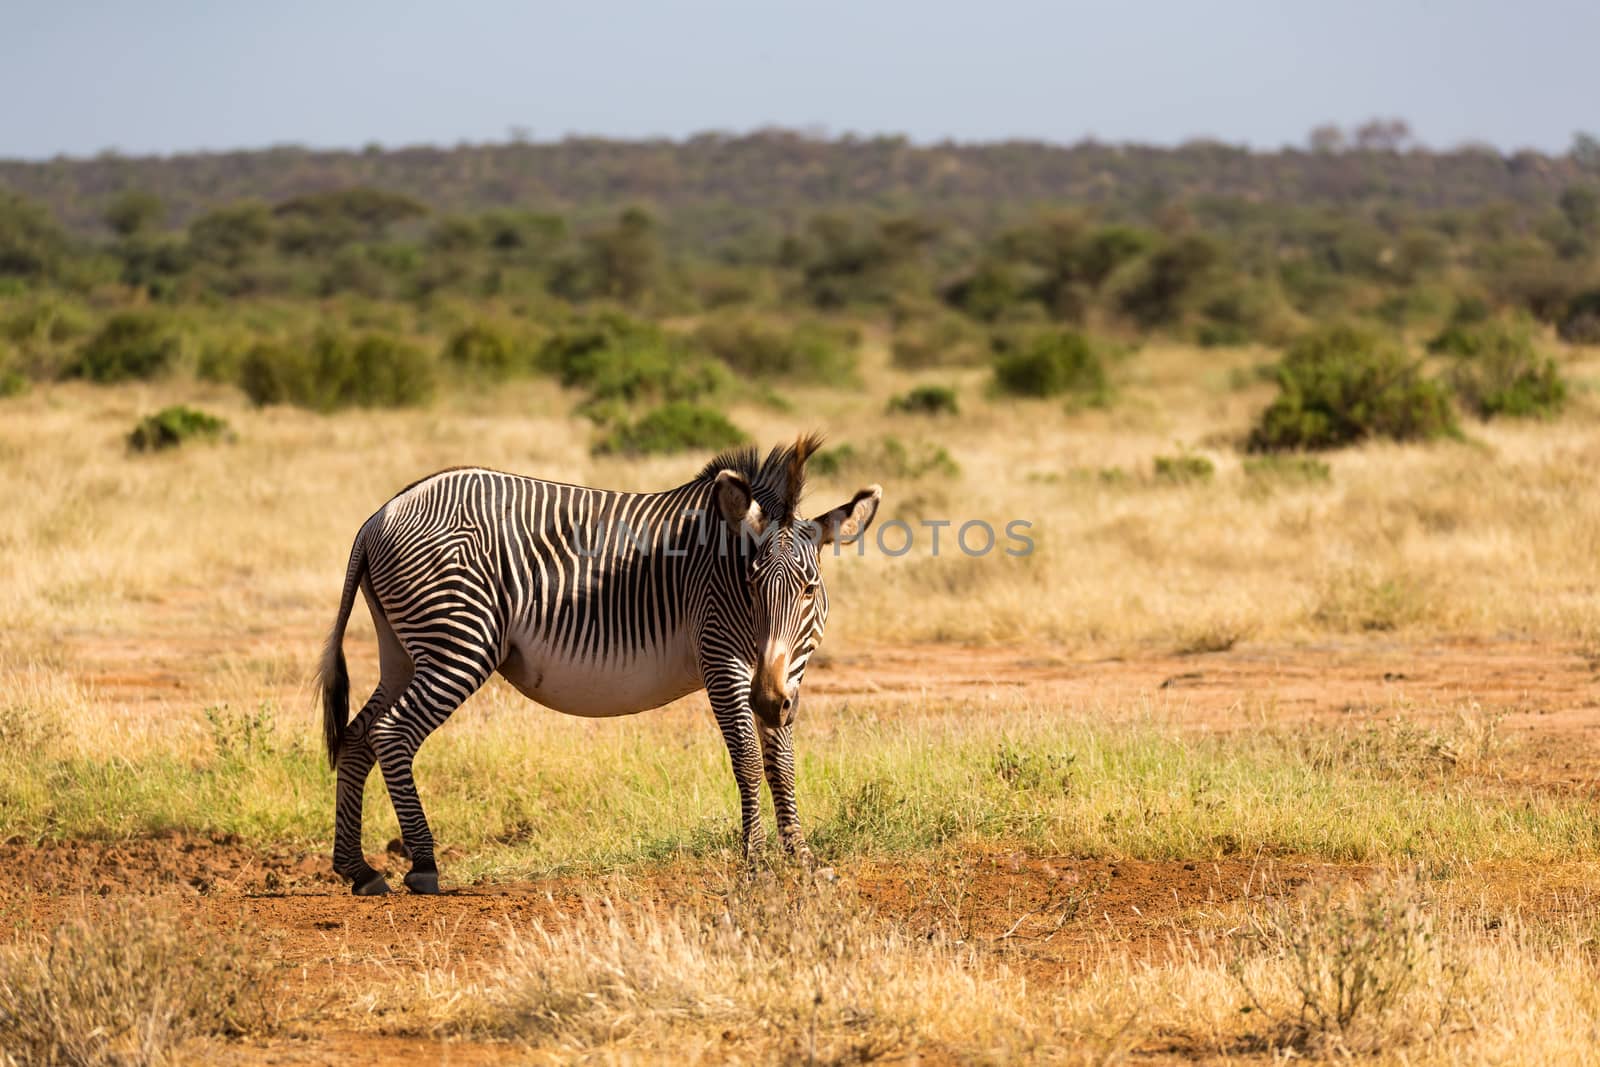 Grevy zebras are grazing in the countryside of Samburu in Kenya by 25ehaag6